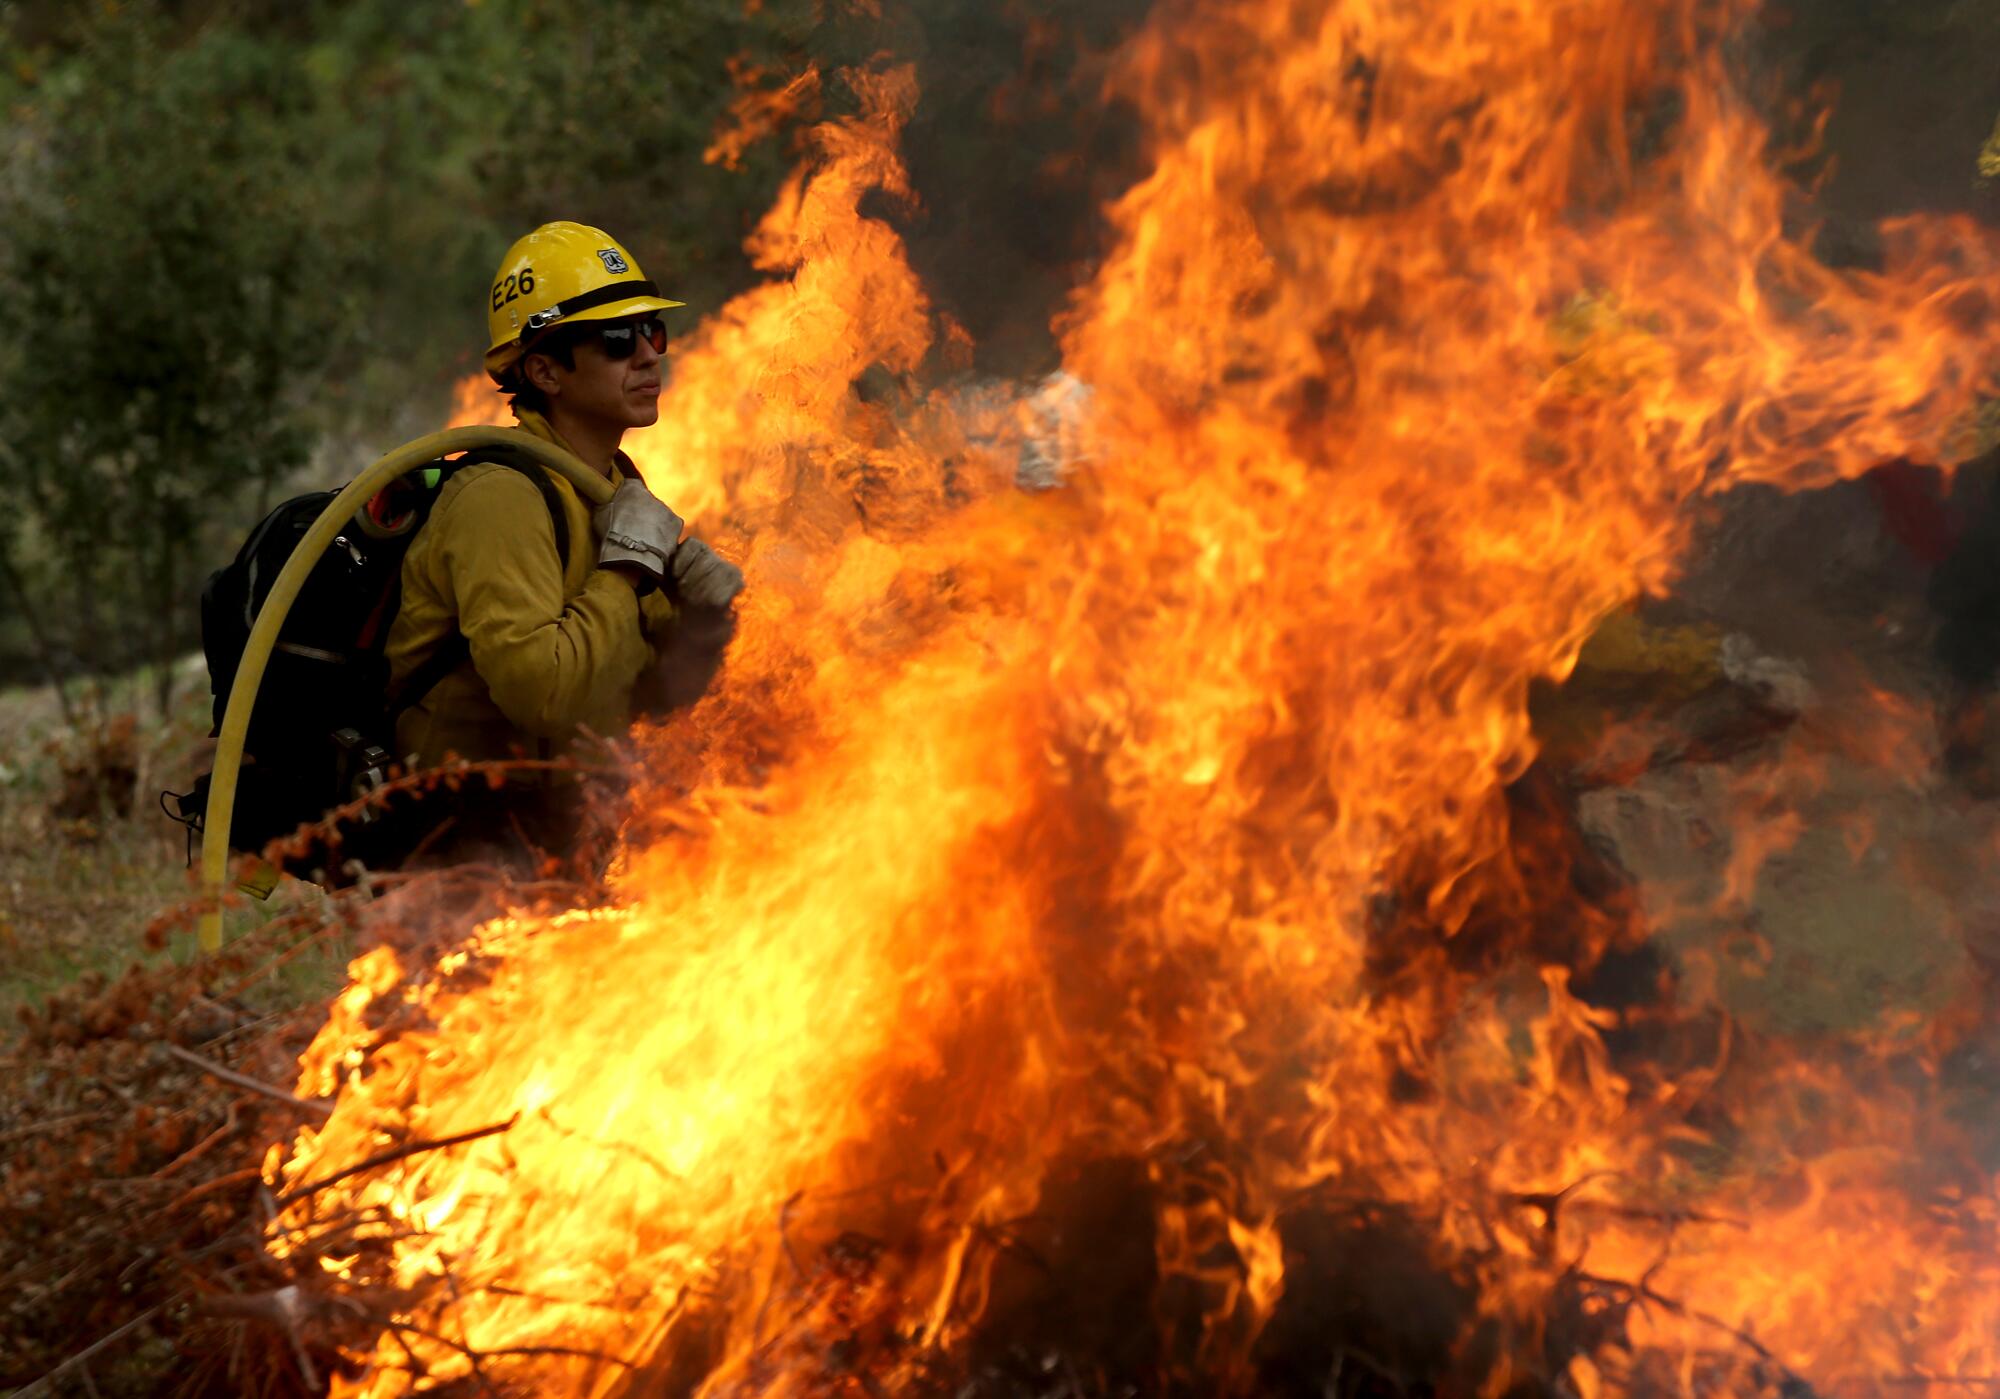 A firefighter stands near burning debris.